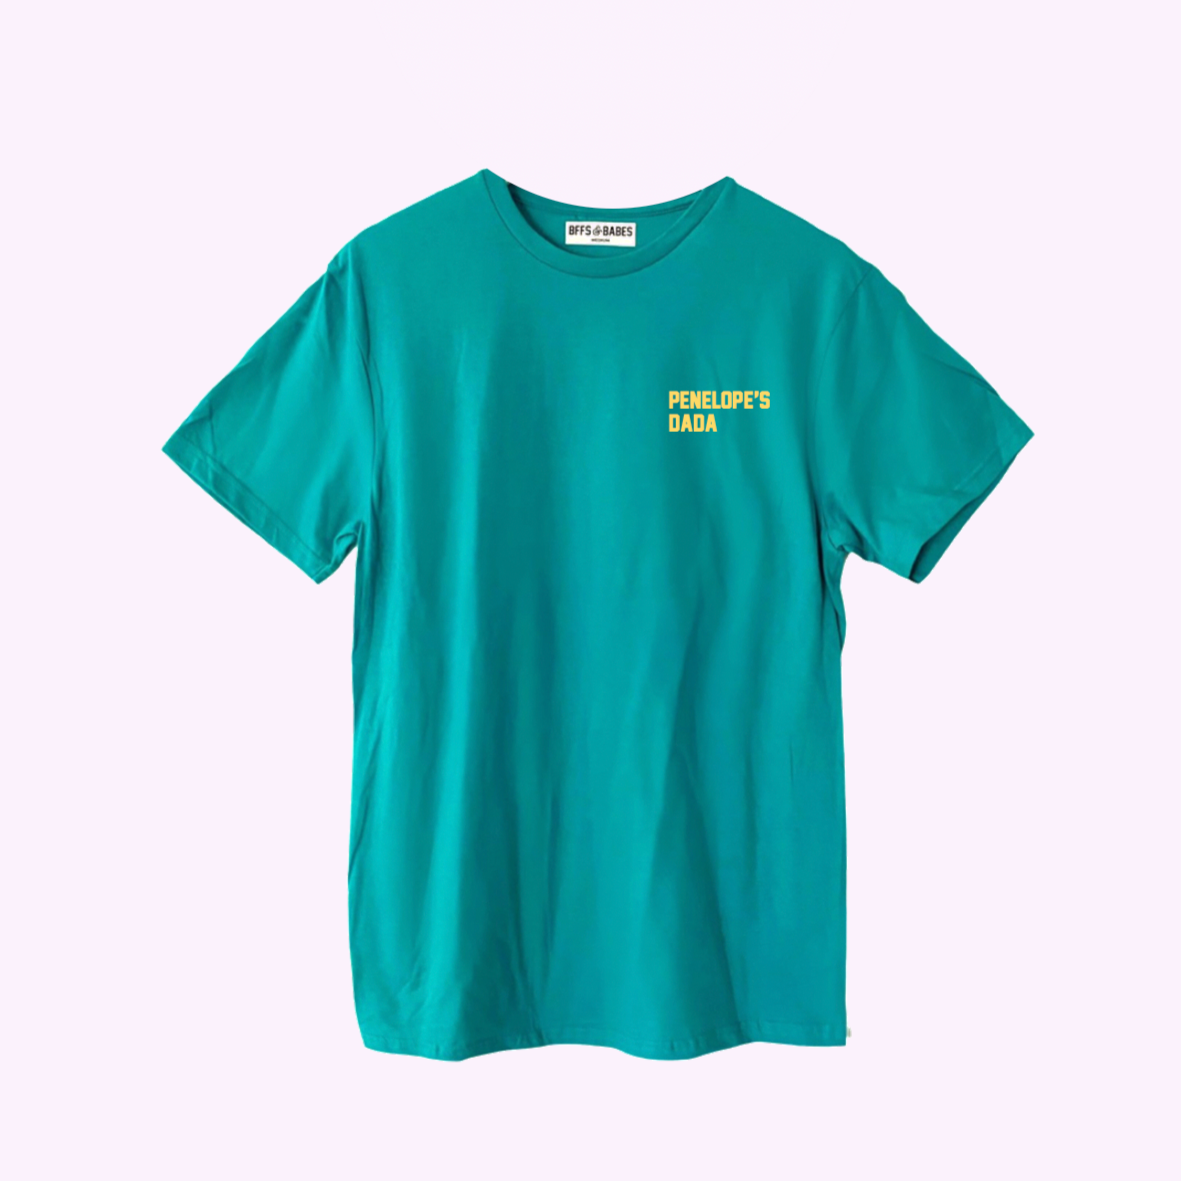 KEEP U CLOSE ♡ teal personalizable t-shirt